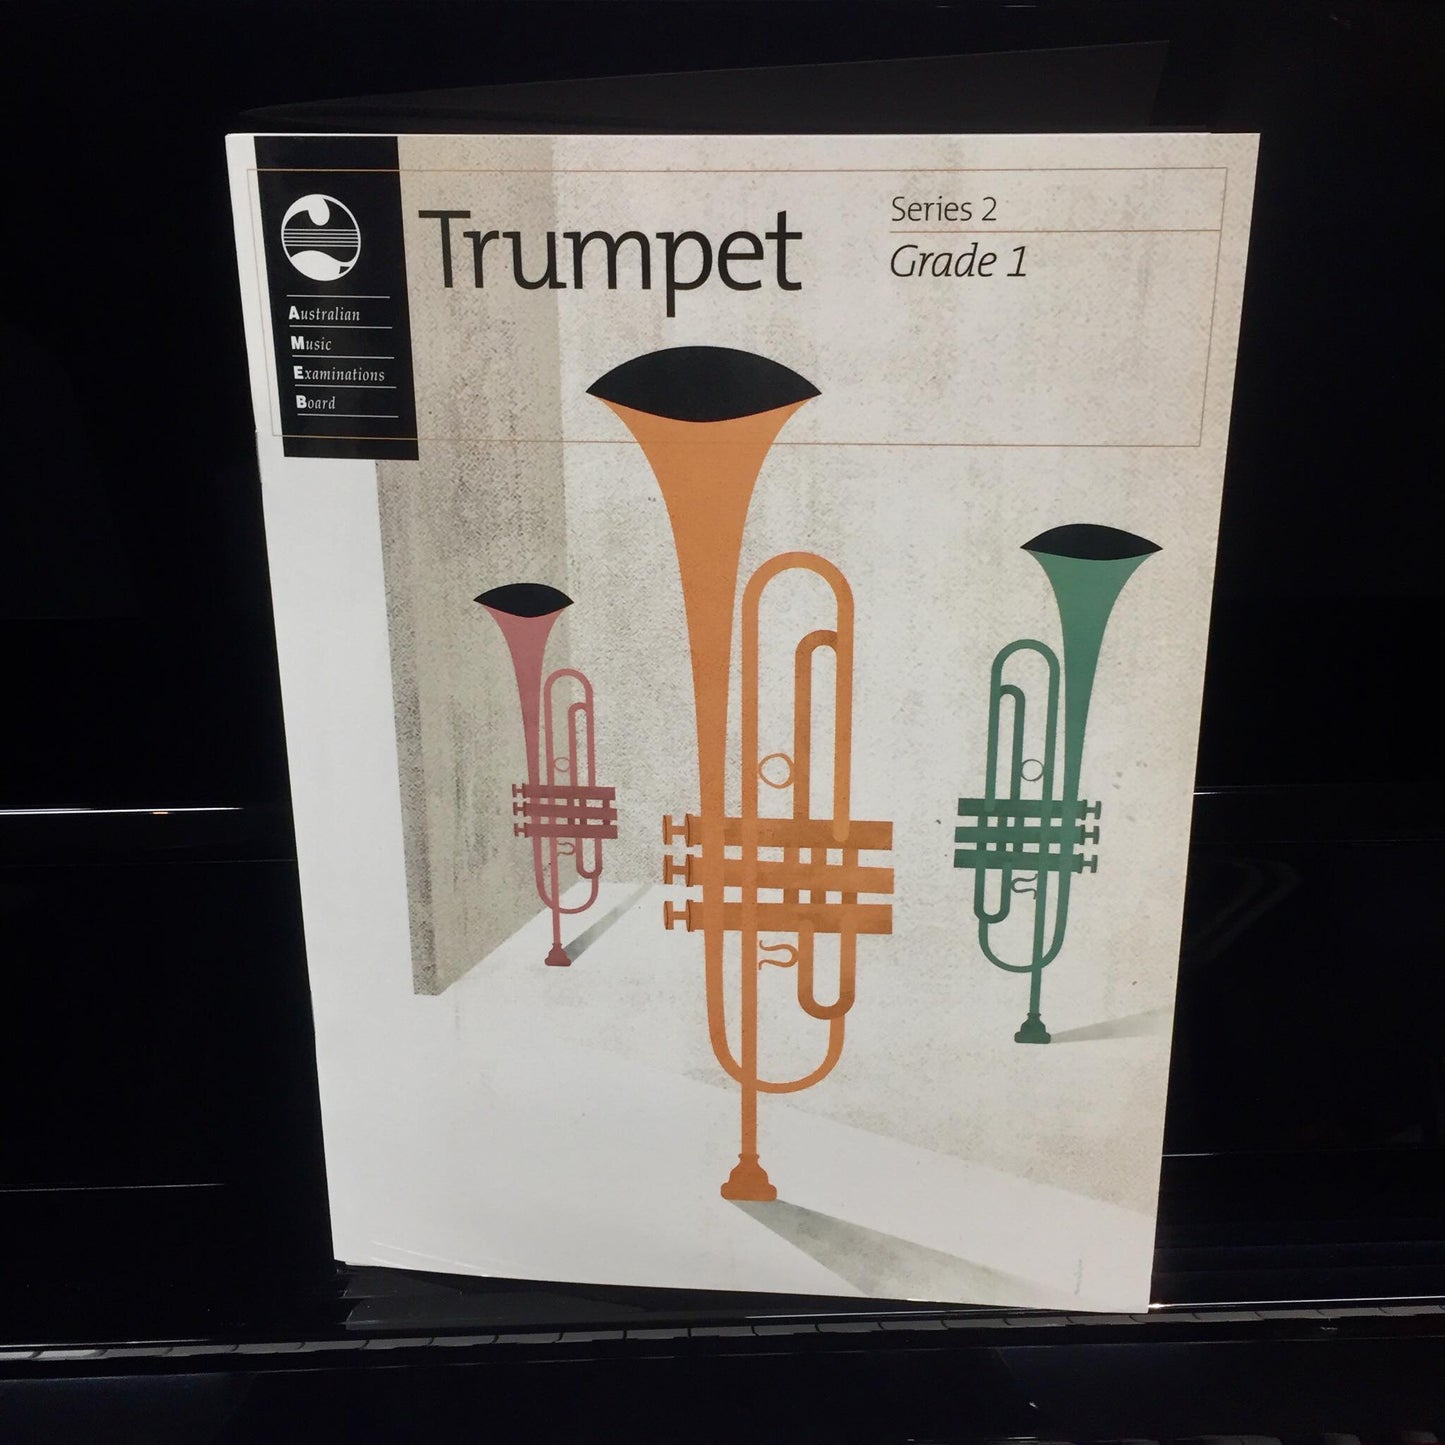 AMEB Trumpet Series 2